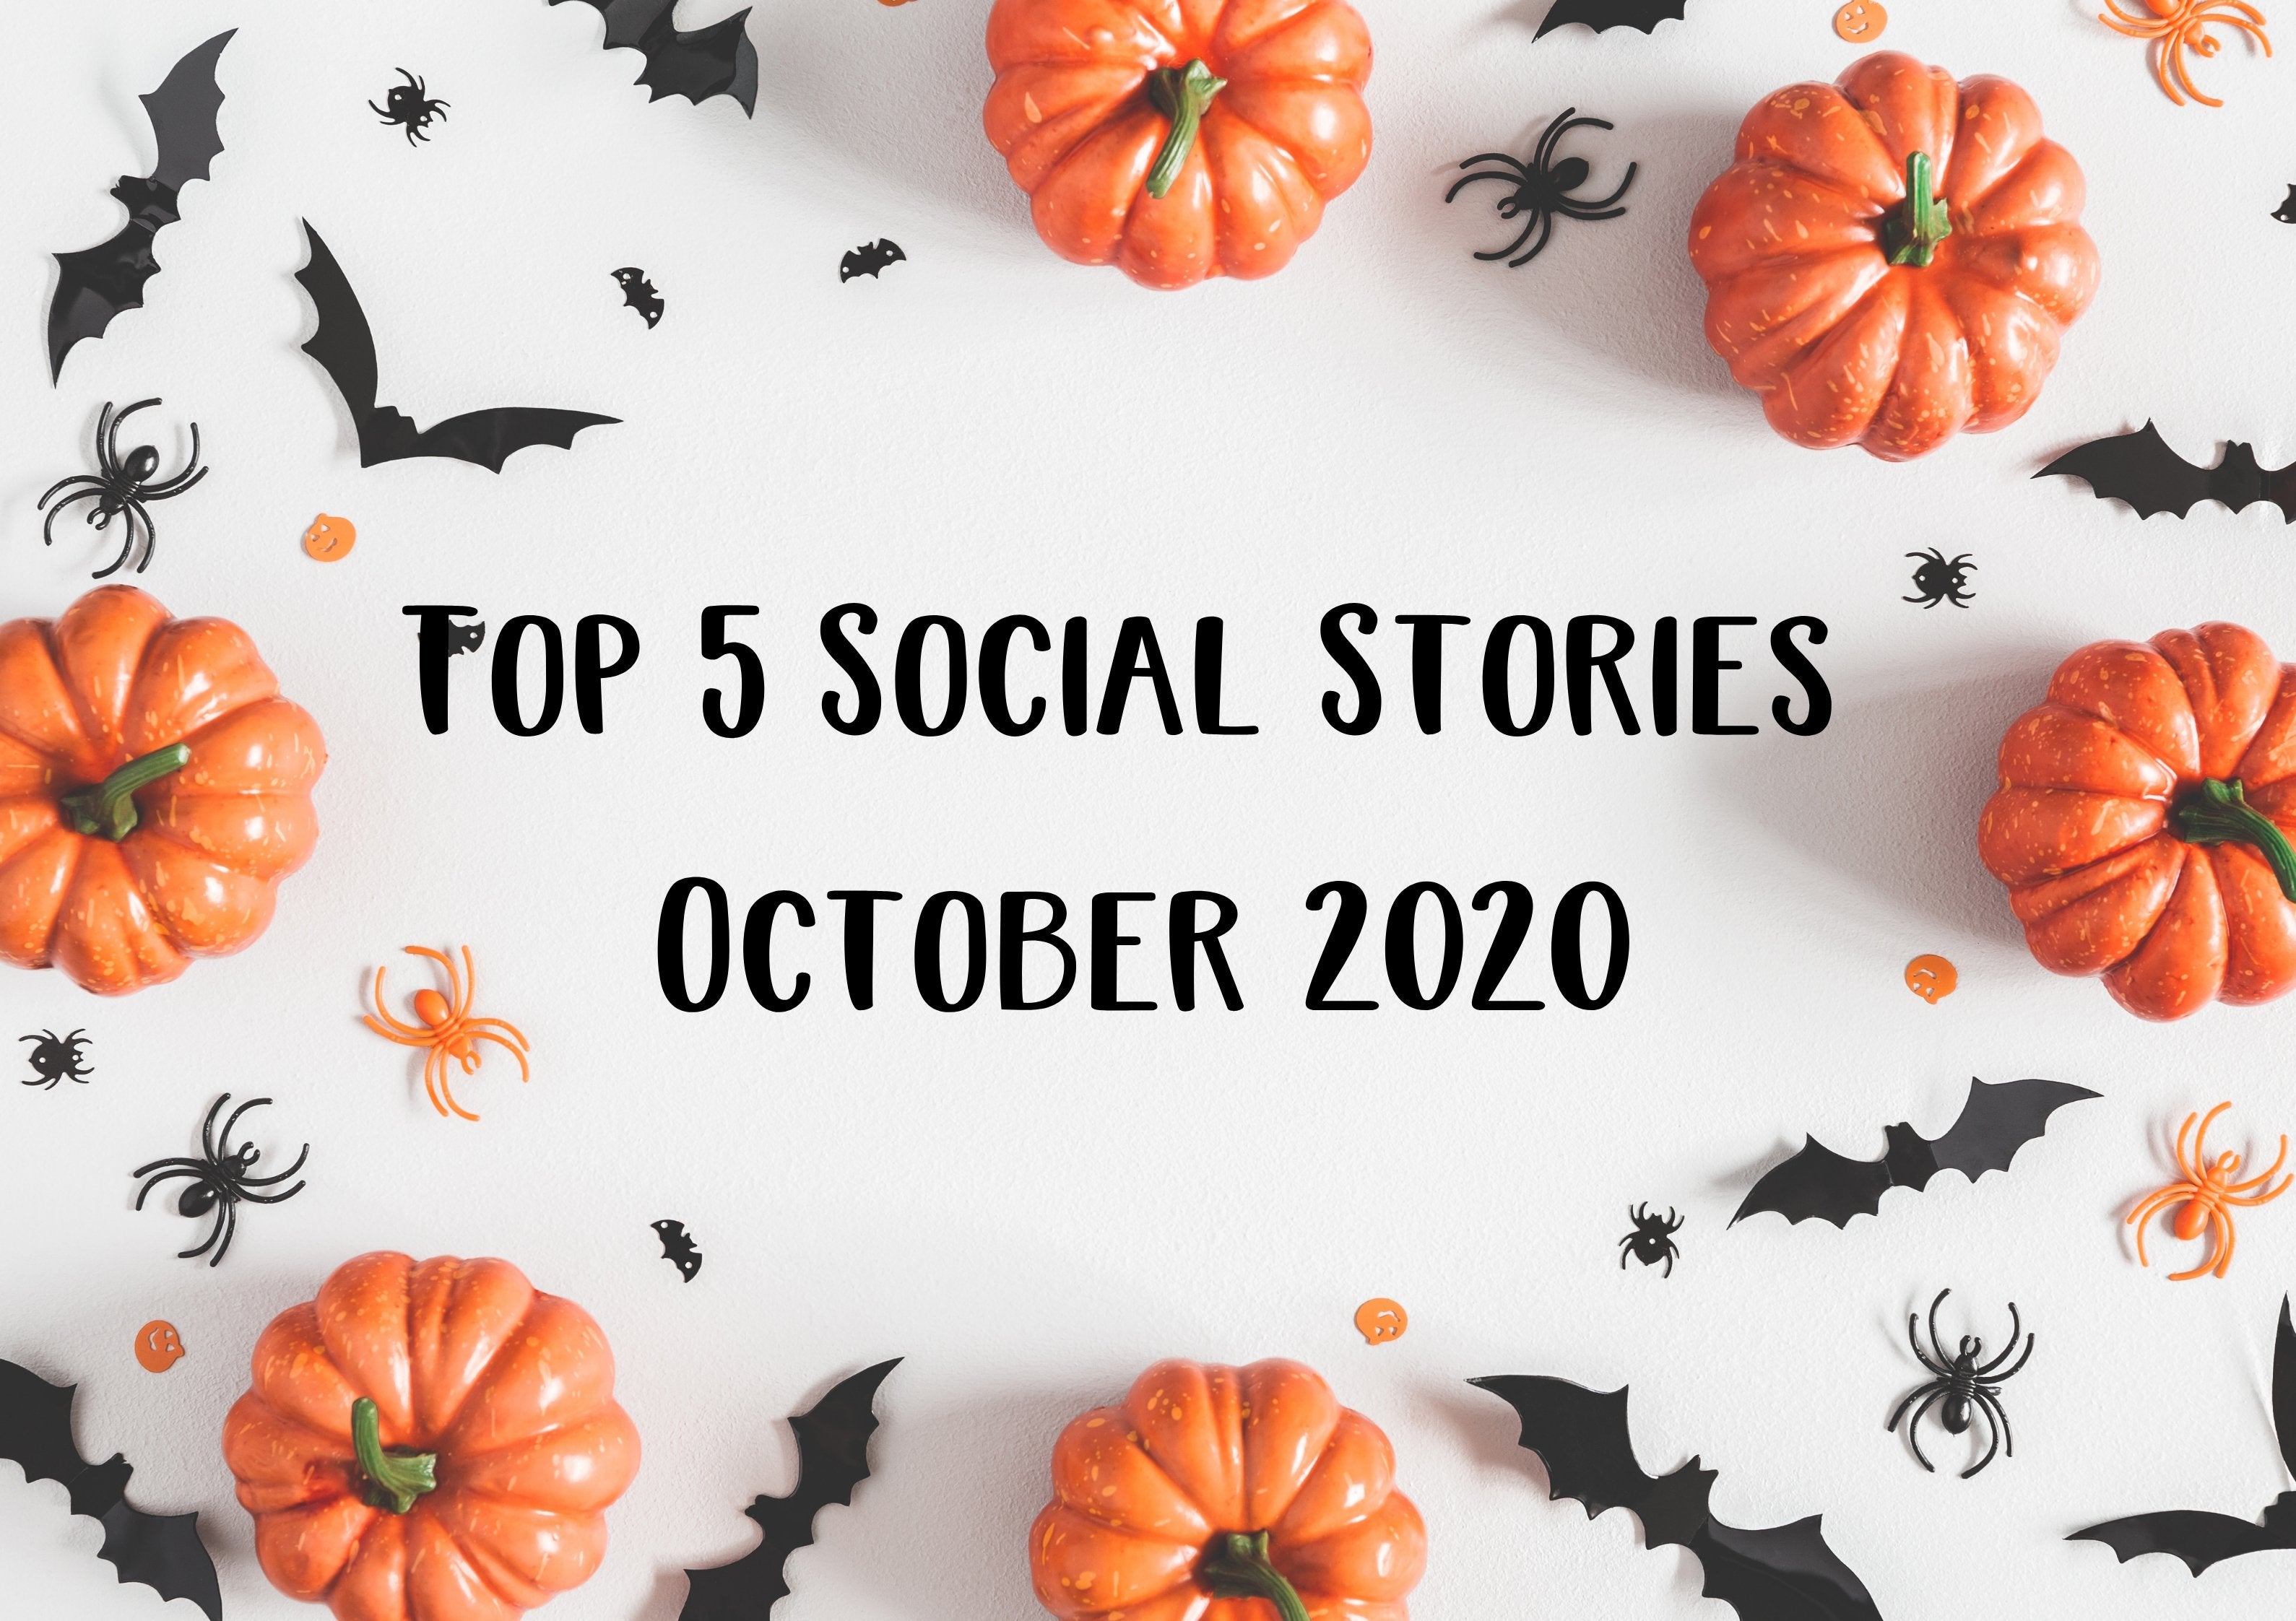 Top 5 Social Stories for October 2020 | Social Stories Club